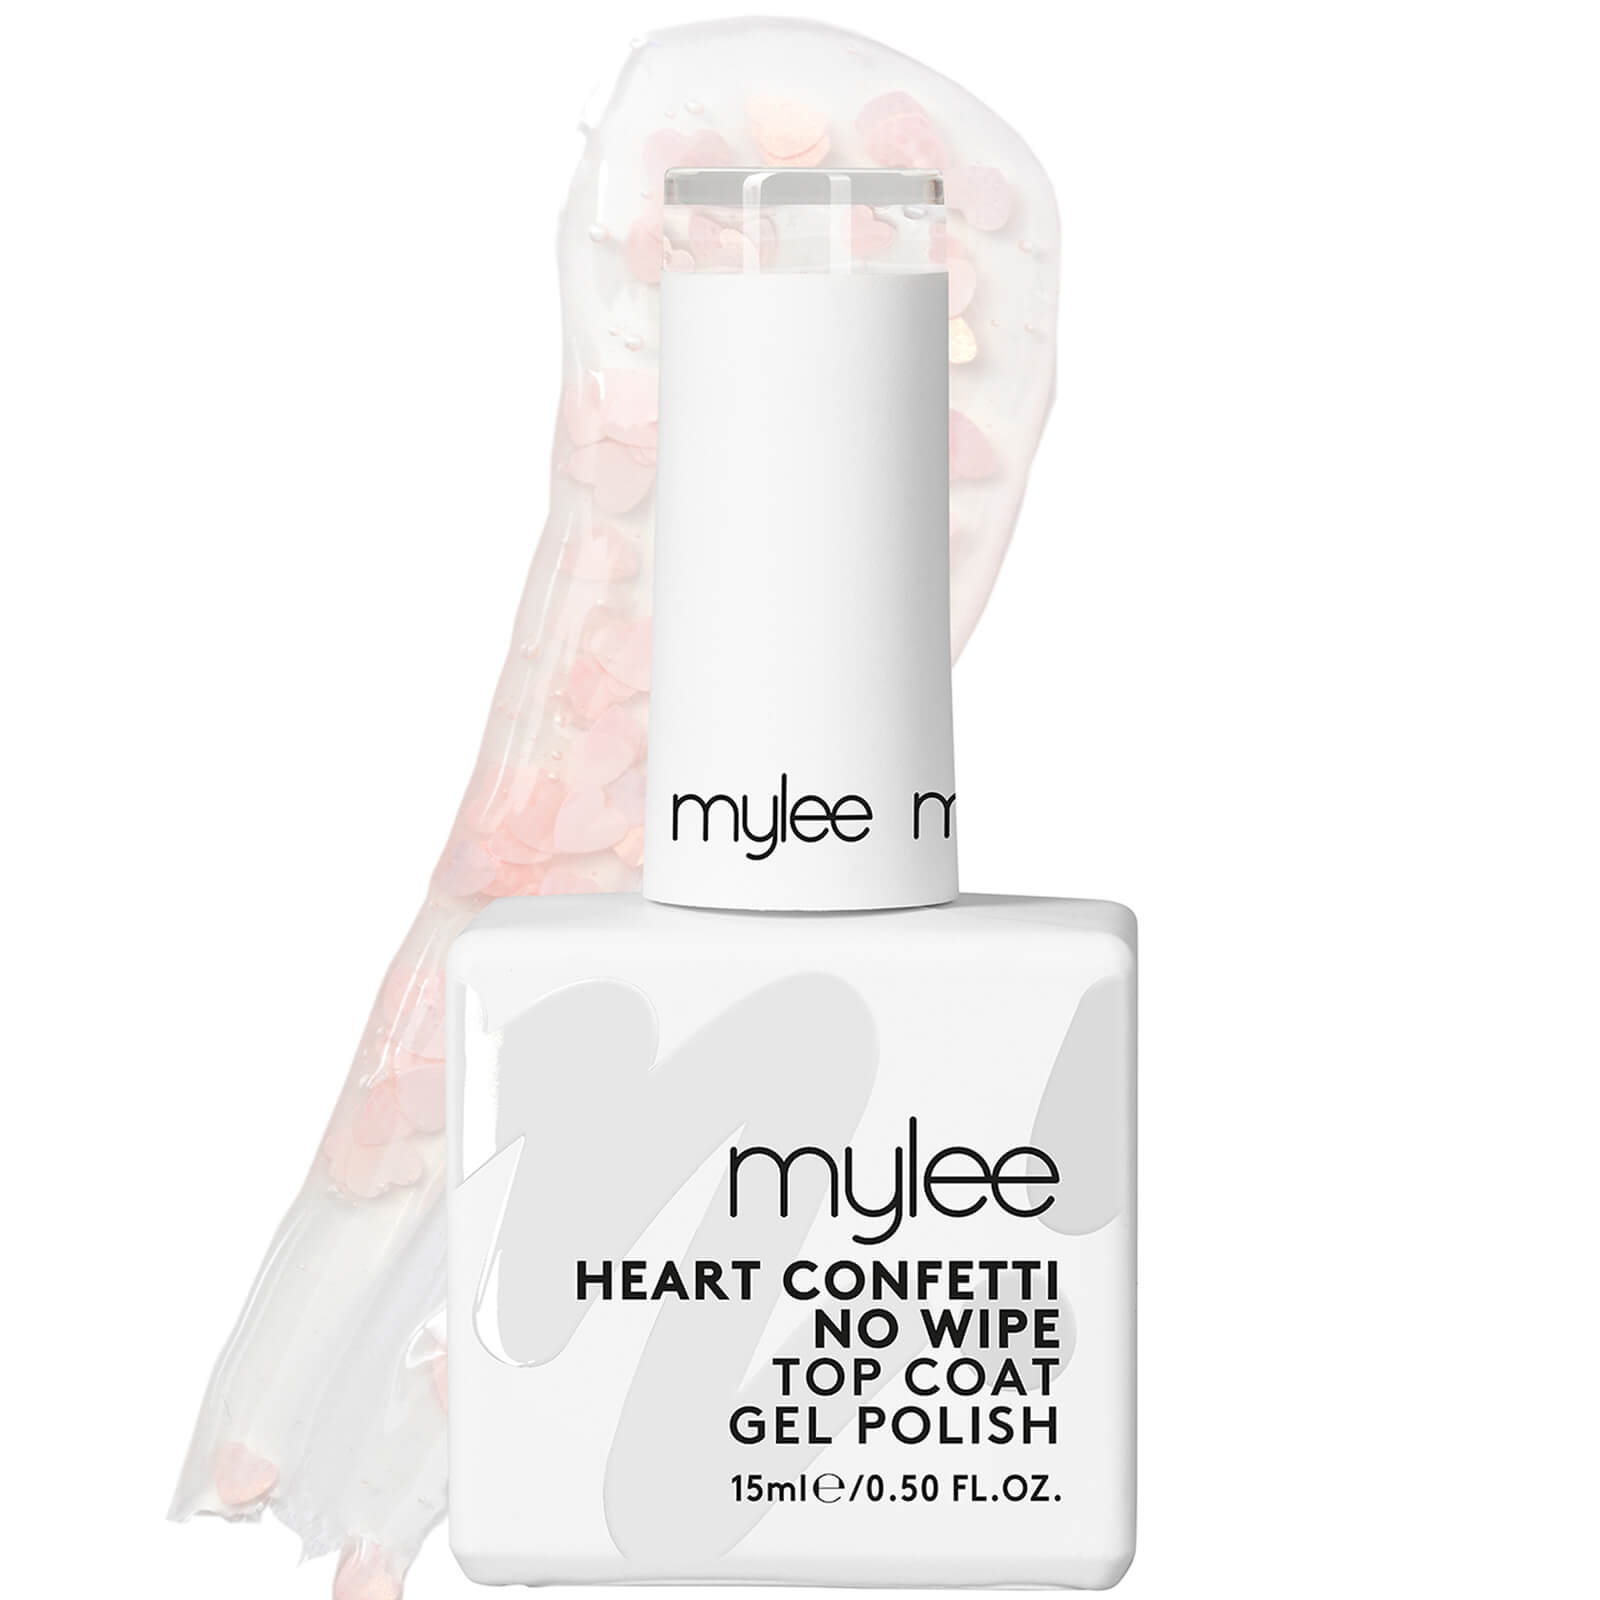 Mylee Mygel Gel Polish No Wipe Heart Confetti Top Coat 15ml In White